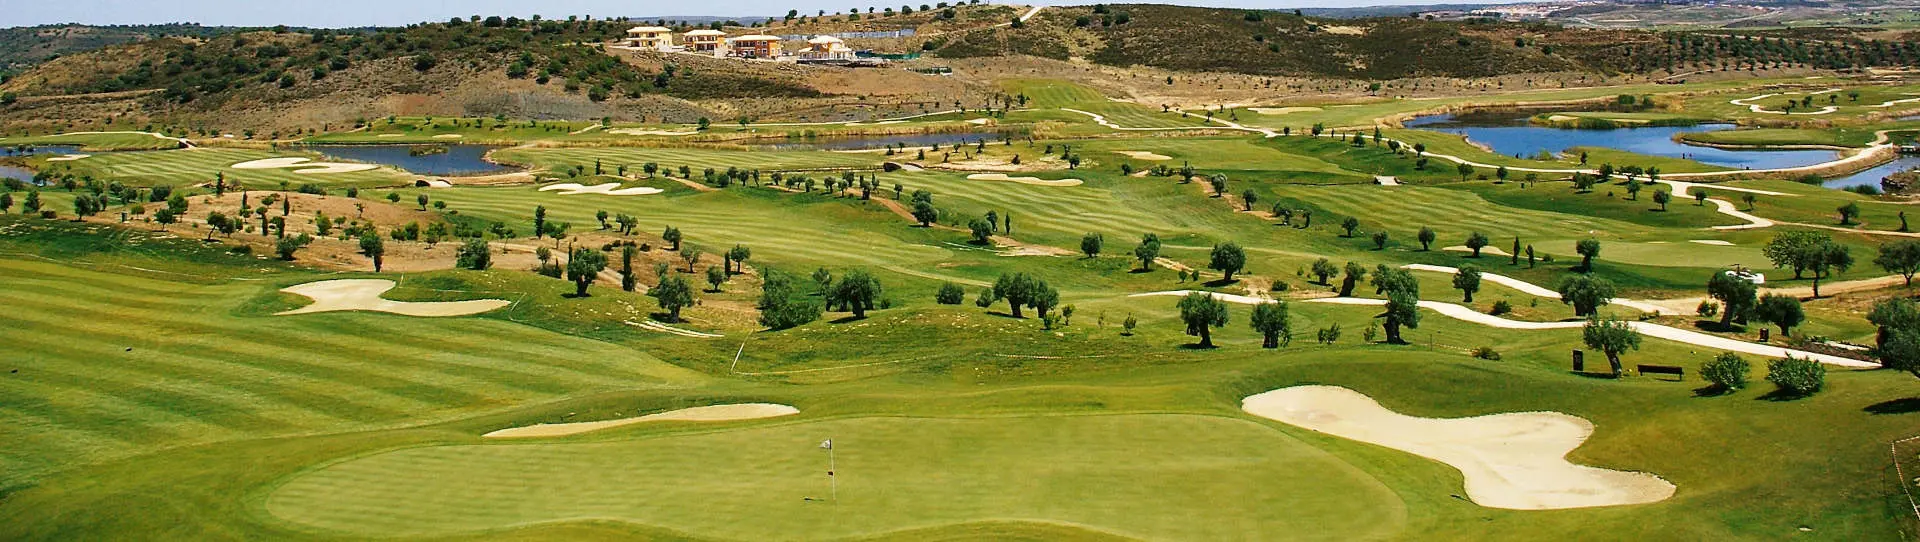 Portugal Golf Driving Range - Quinta do Vale Driving Range - Photo 1